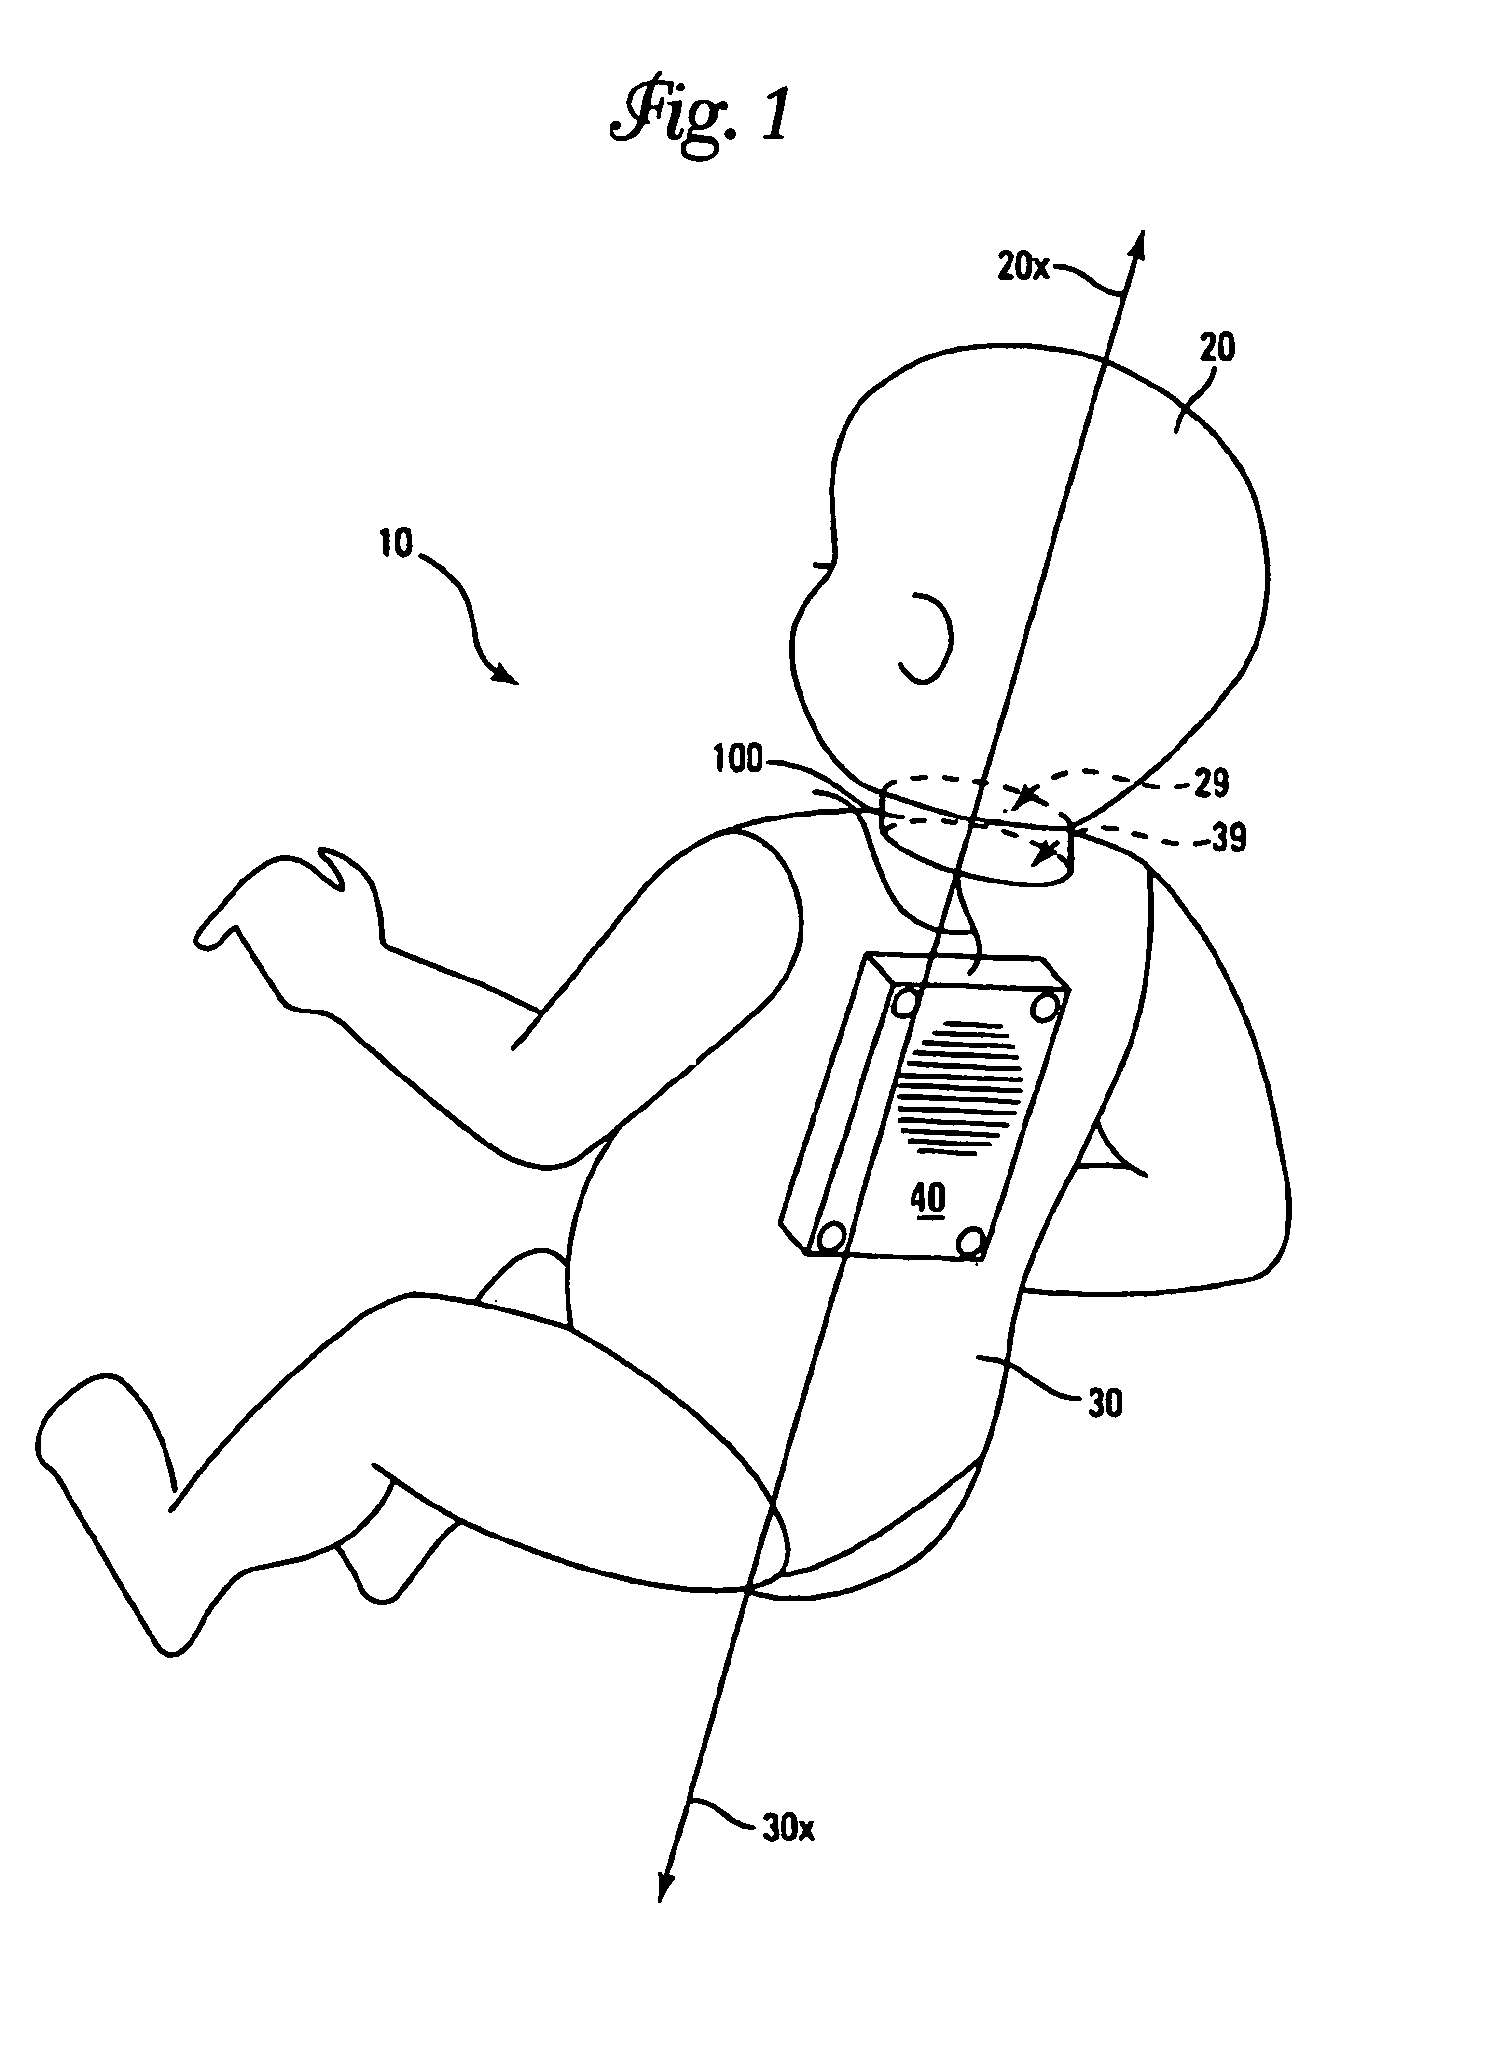 Infant simulator with floppy neck assembly having a full range of motion